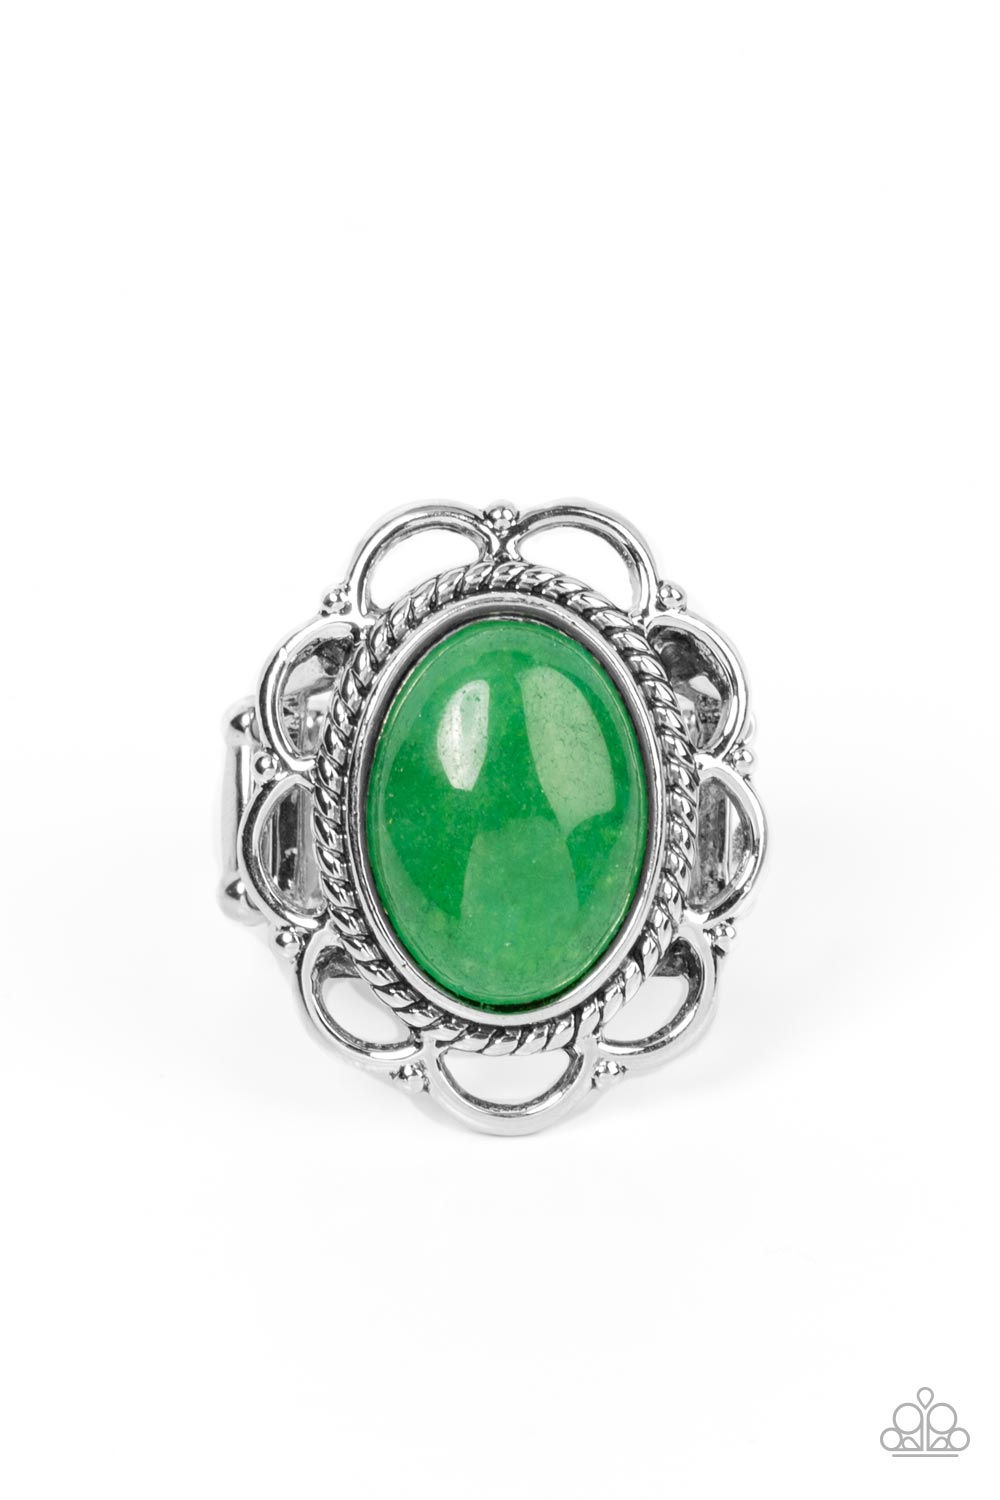 Gemstone Eden Green Jade Stone Ring - Paparazzi Accessories- lightbox - CarasShop.com - $5 Jewelry by Cara Jewels